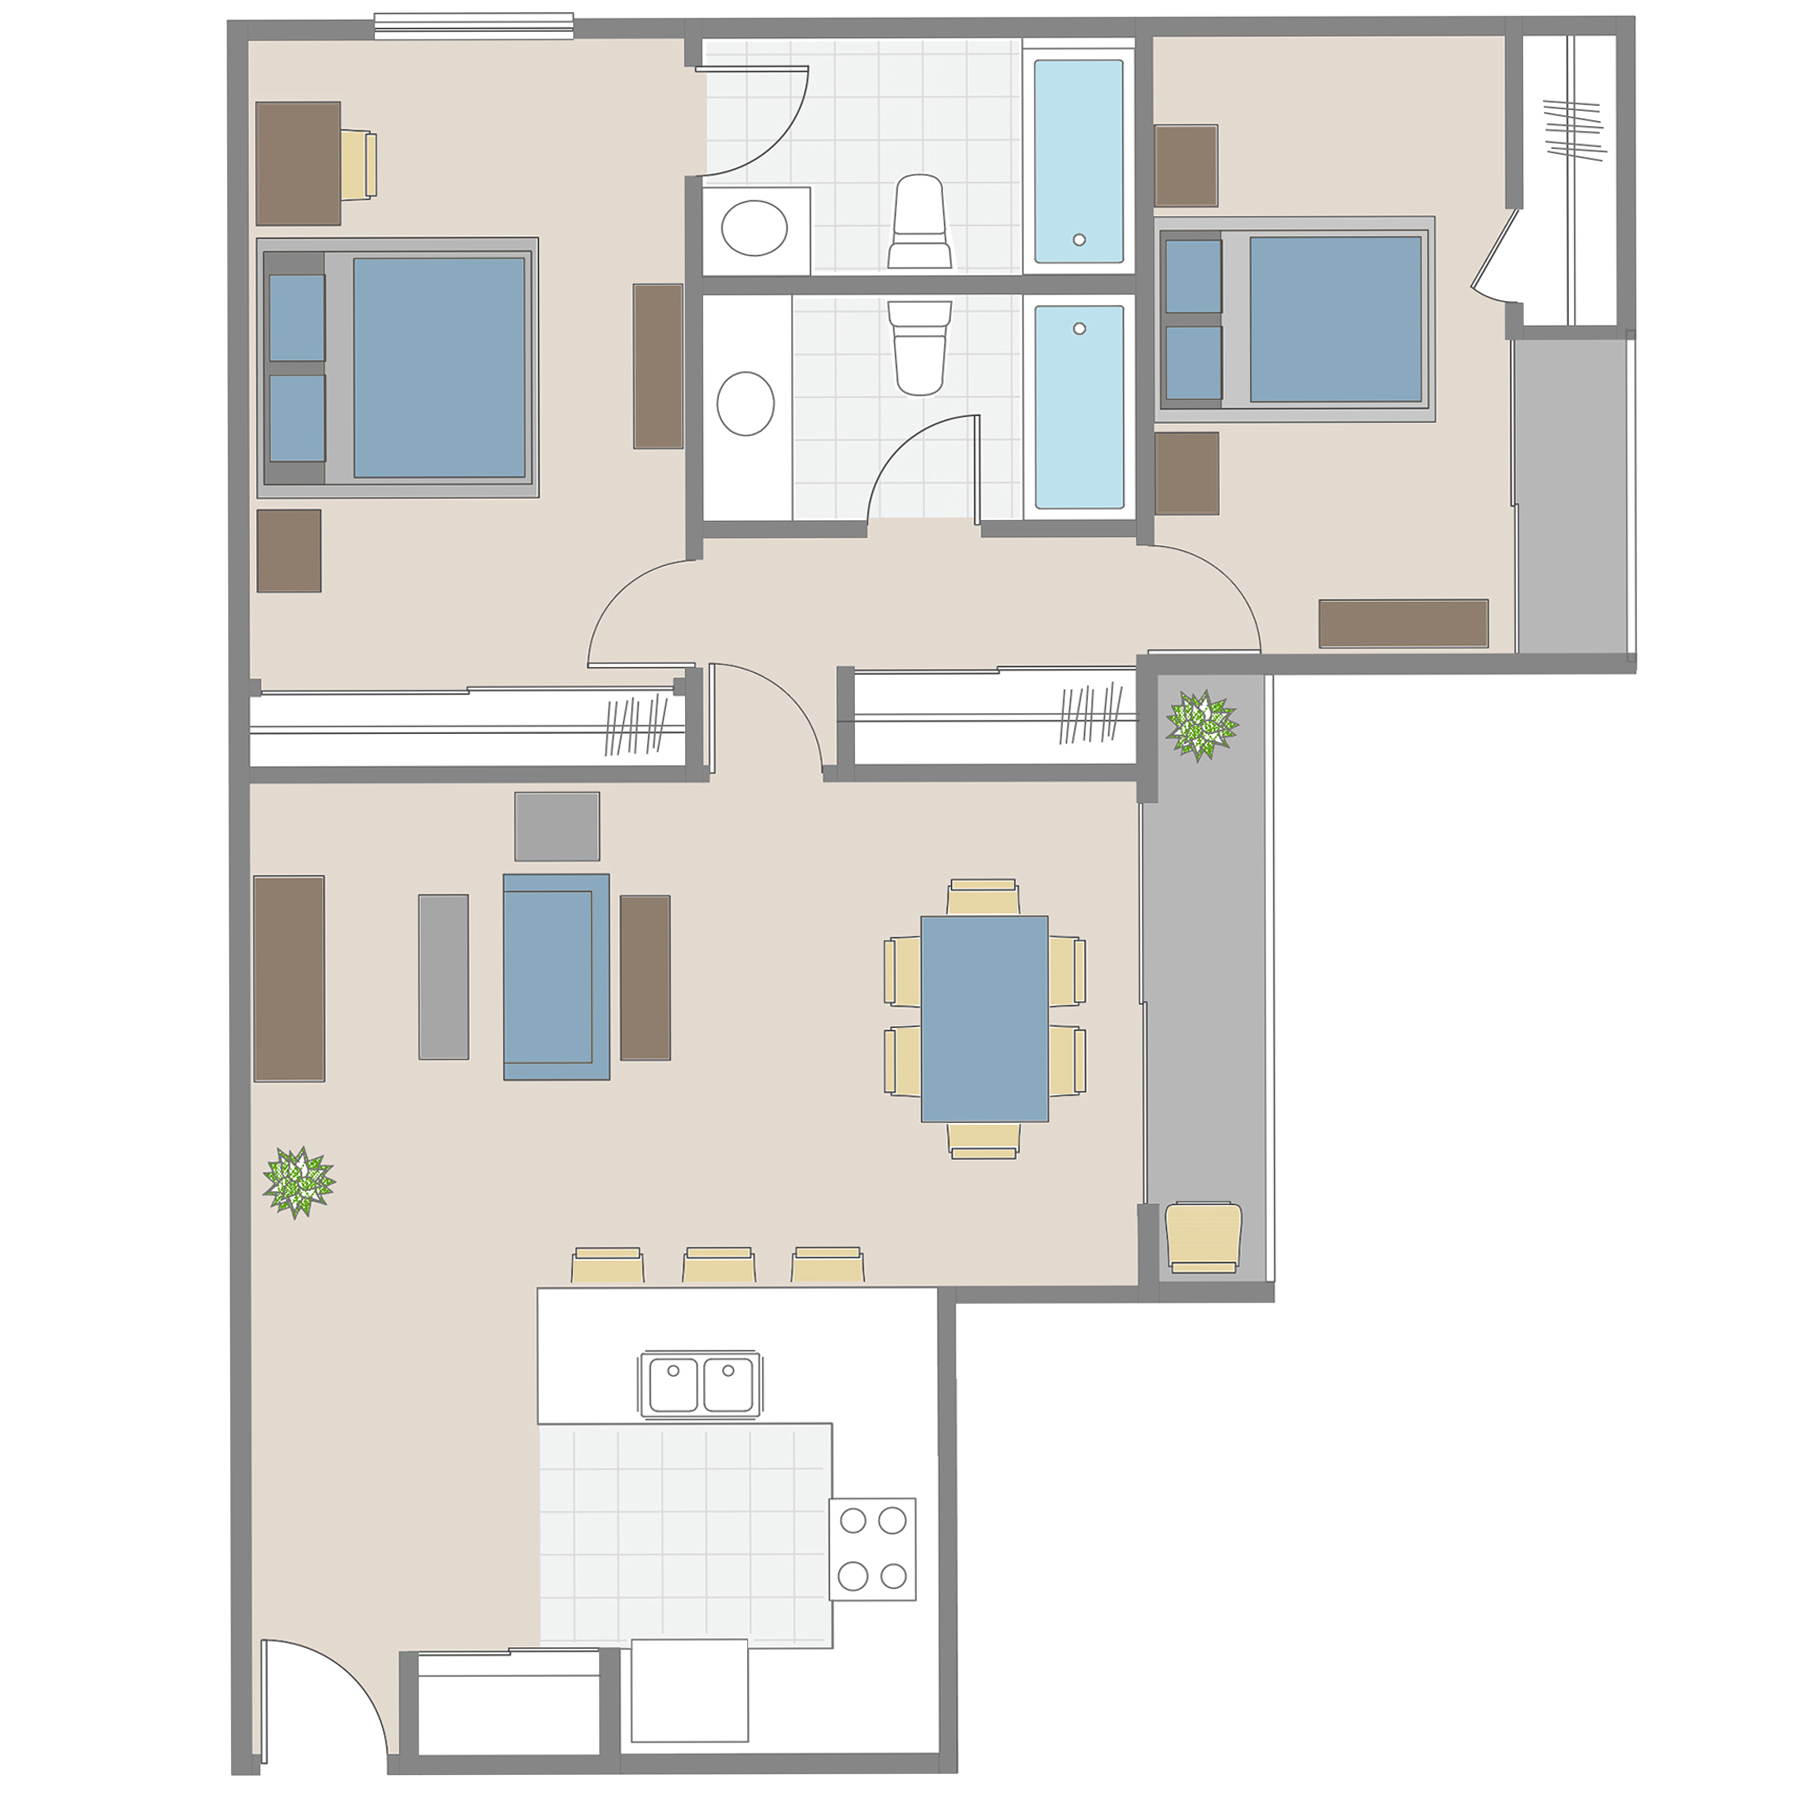 Two Bedroom / Two Bath floor plan